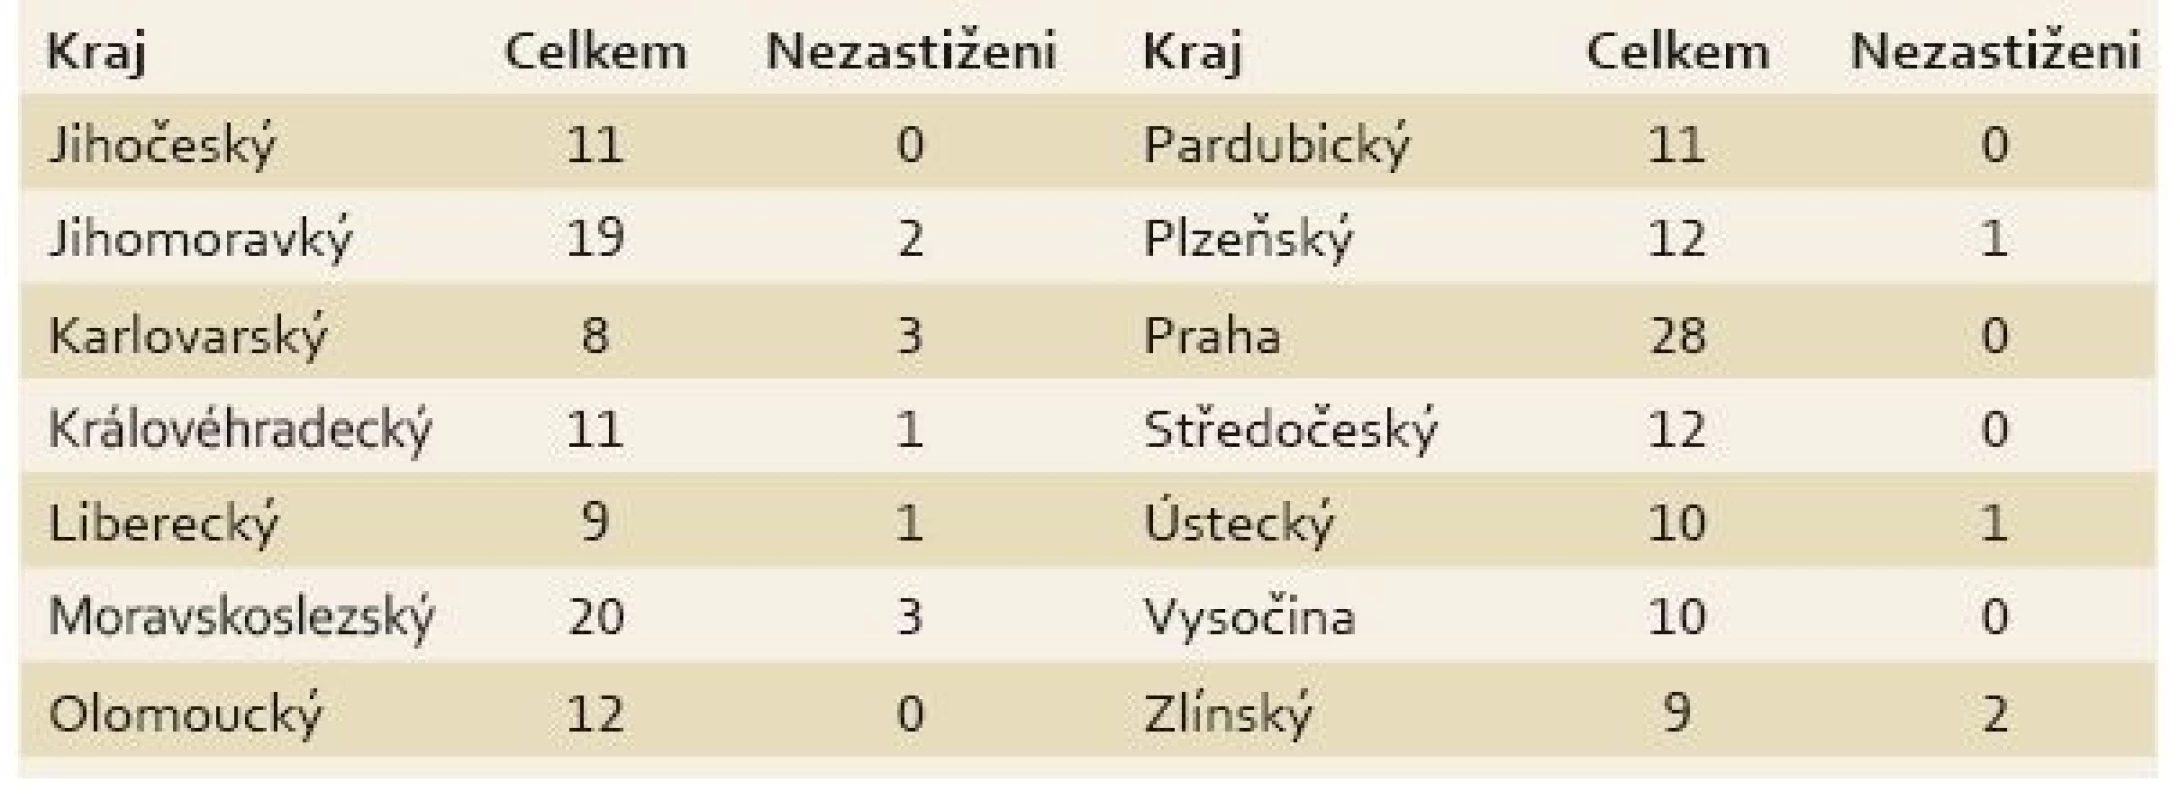 Počet center pro každý kraj v ČR.
Tab. 2. Numbers of centres in the regions of the Czech Republic.